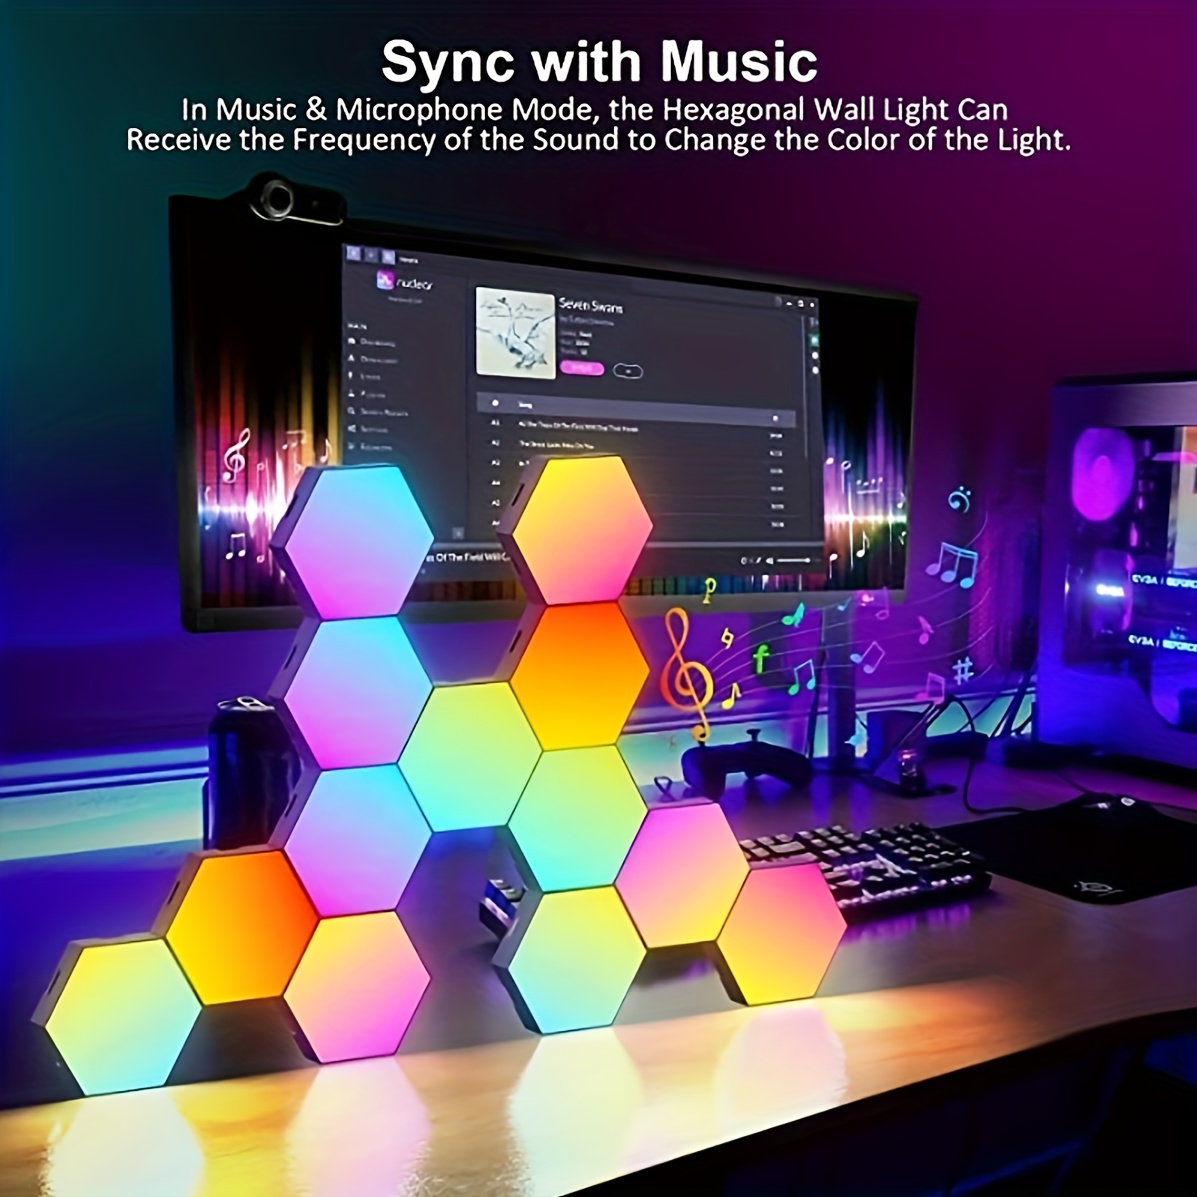 Hexagonal Light panel - cool music sync RGB hexagonal LED Light